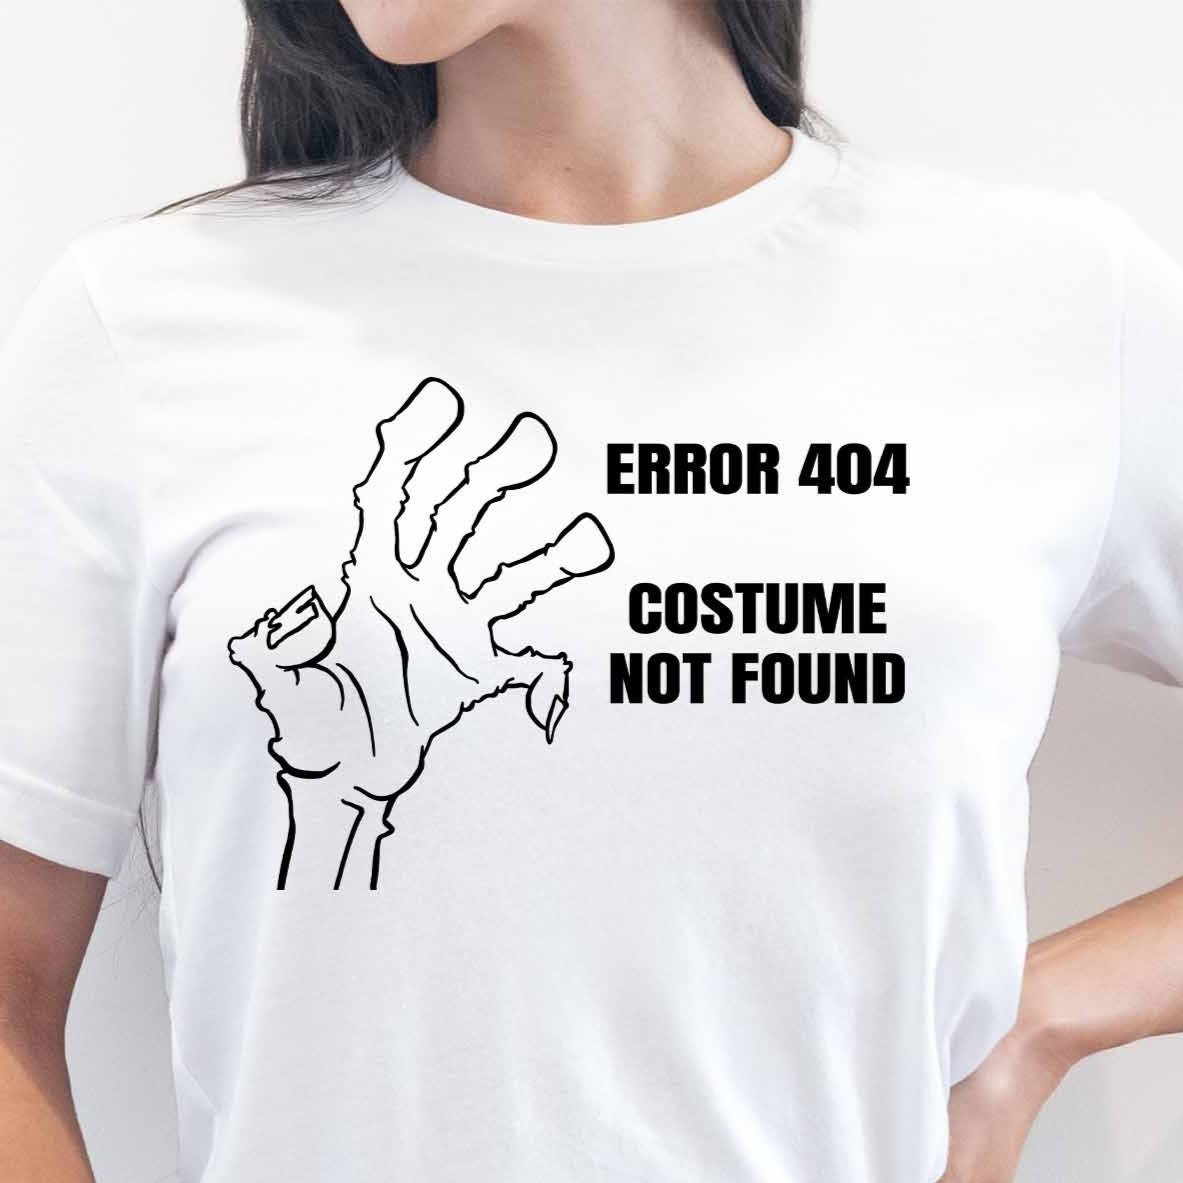 Error 404 Costume Not Found Graphic Tee - My Custom Tee Party